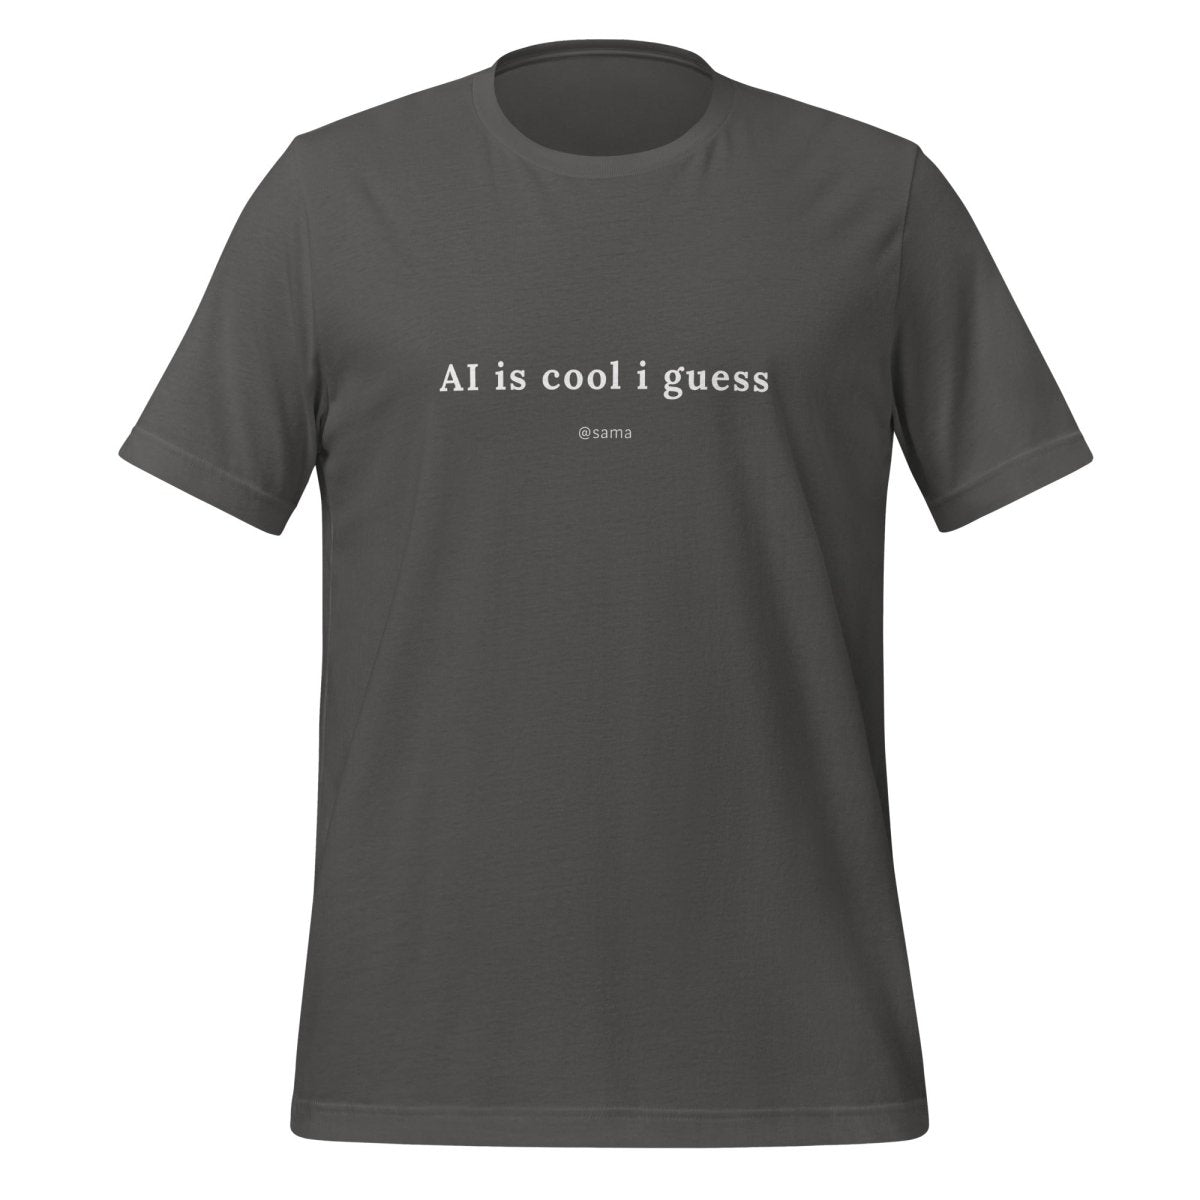 AI is cool i guess [@sama] T - Shirt (unisex) - Asphalt - AI Store